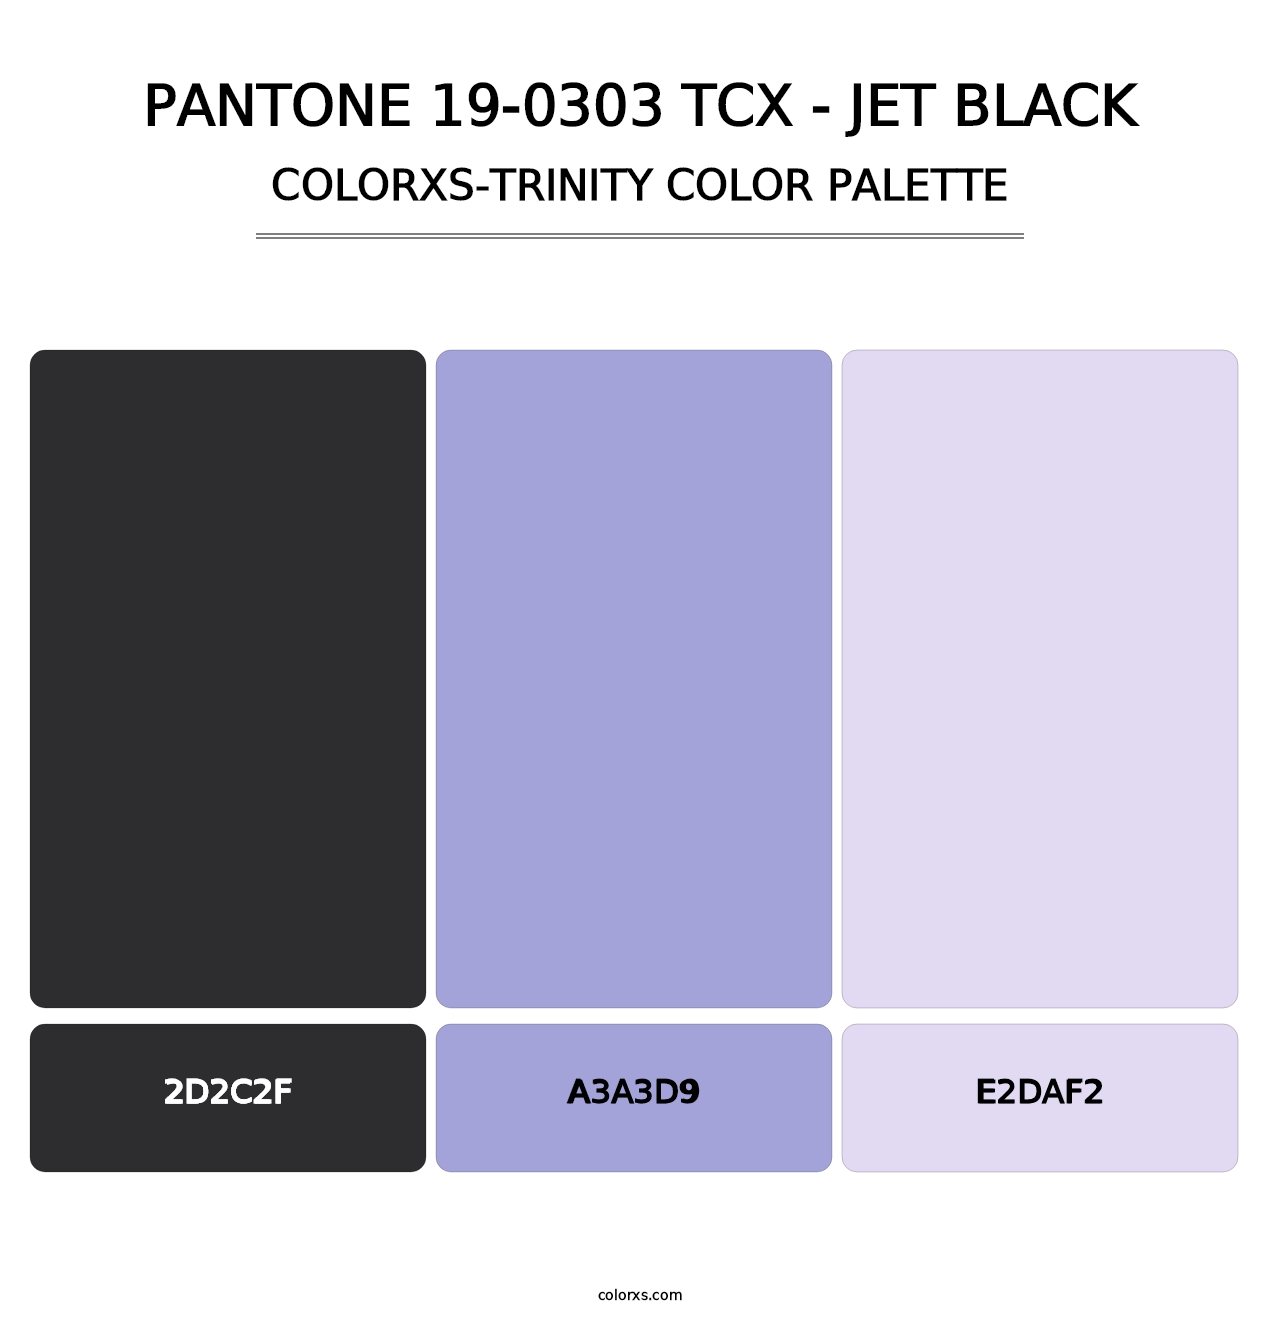 PANTONE 19-0303 TCX - Jet Black - Colorxs Trinity Palette